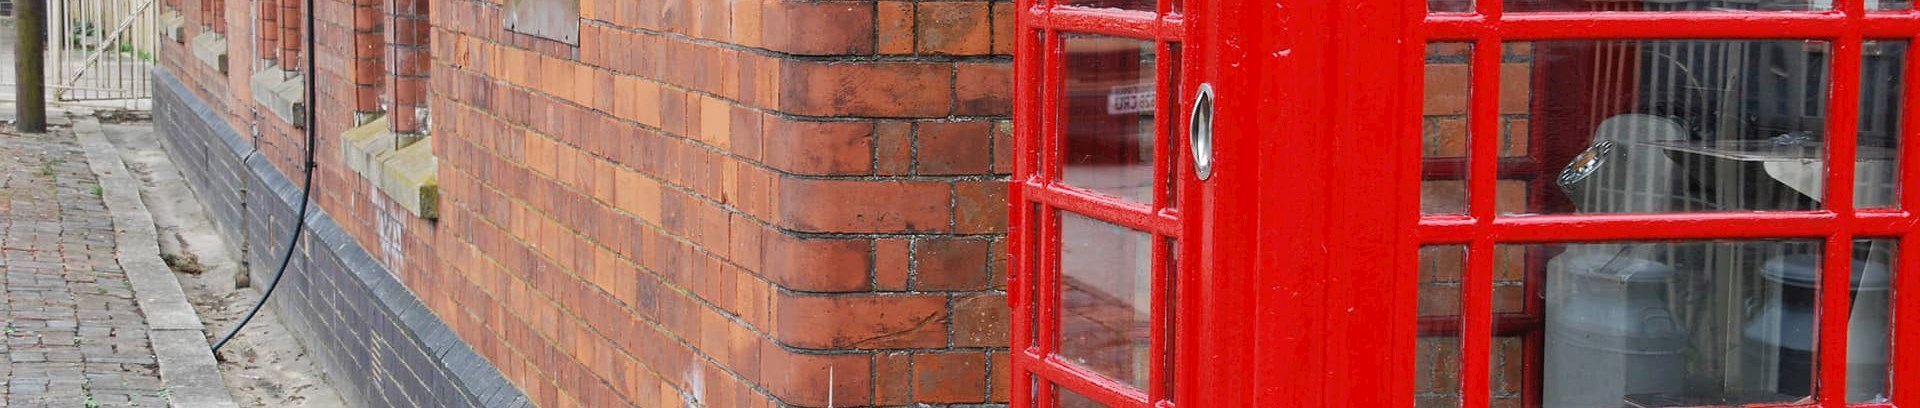 rød telefonboks i London